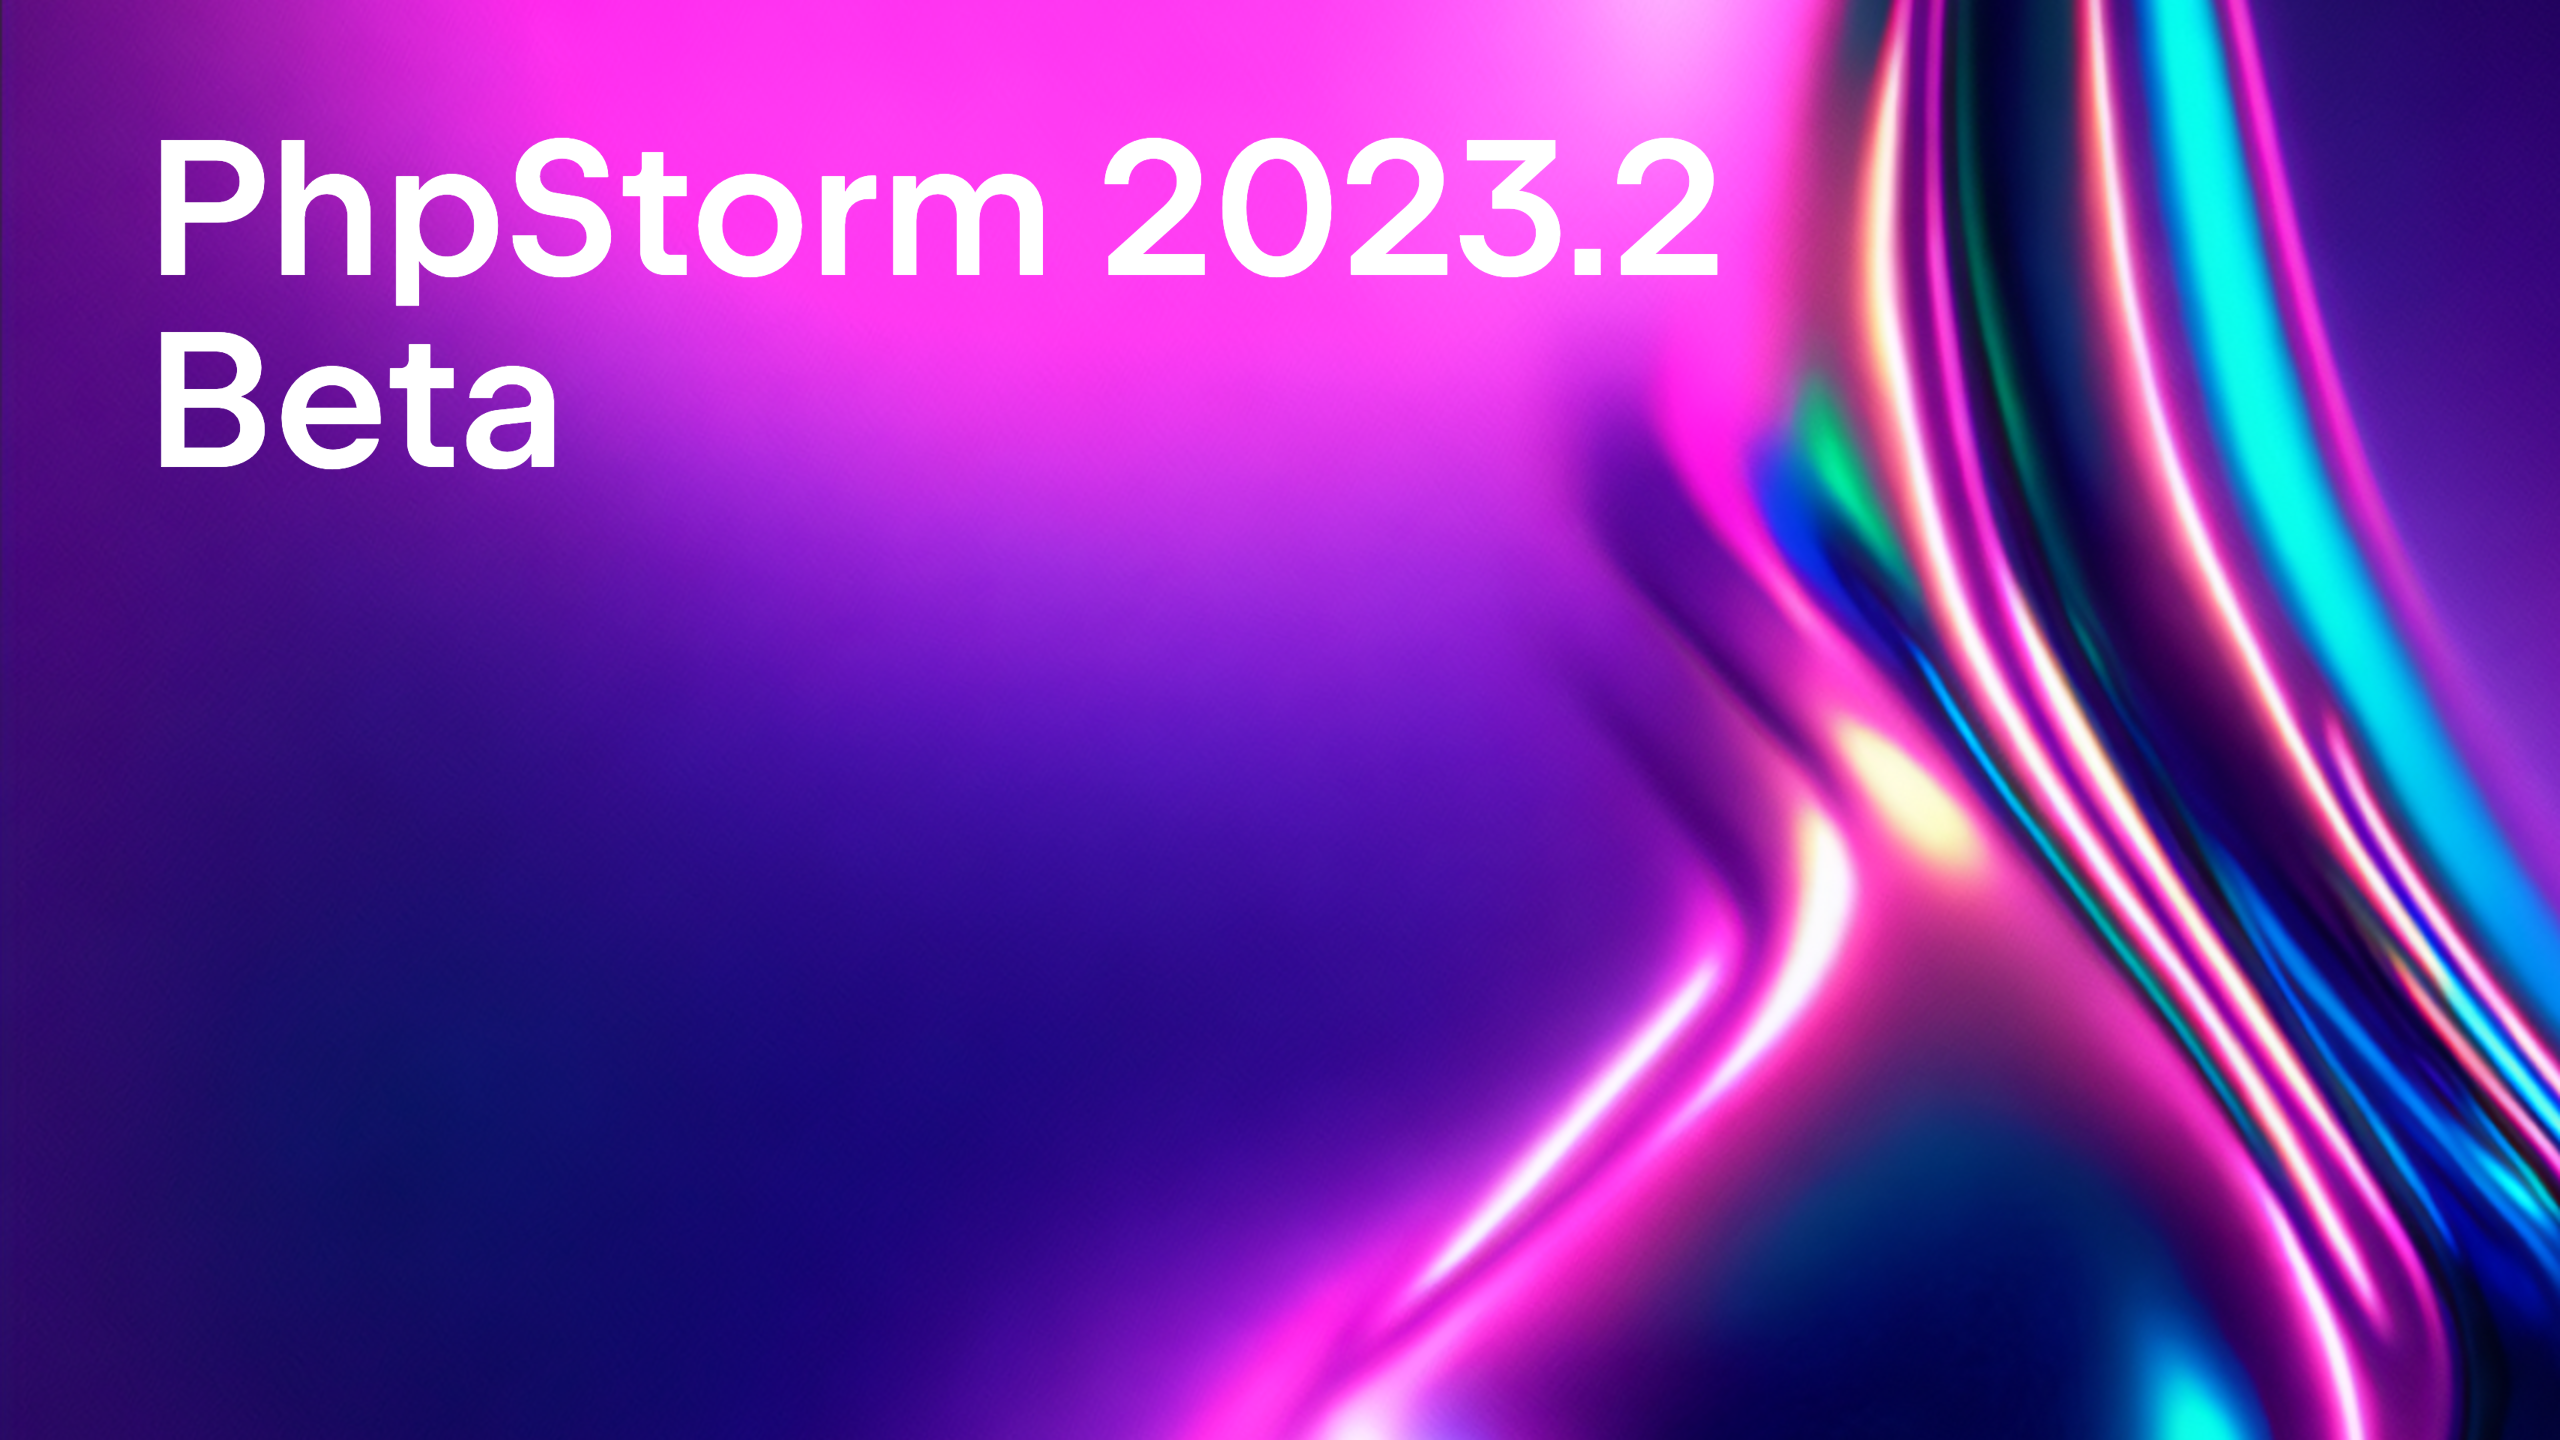 PhpStorm 2023.2 Beta